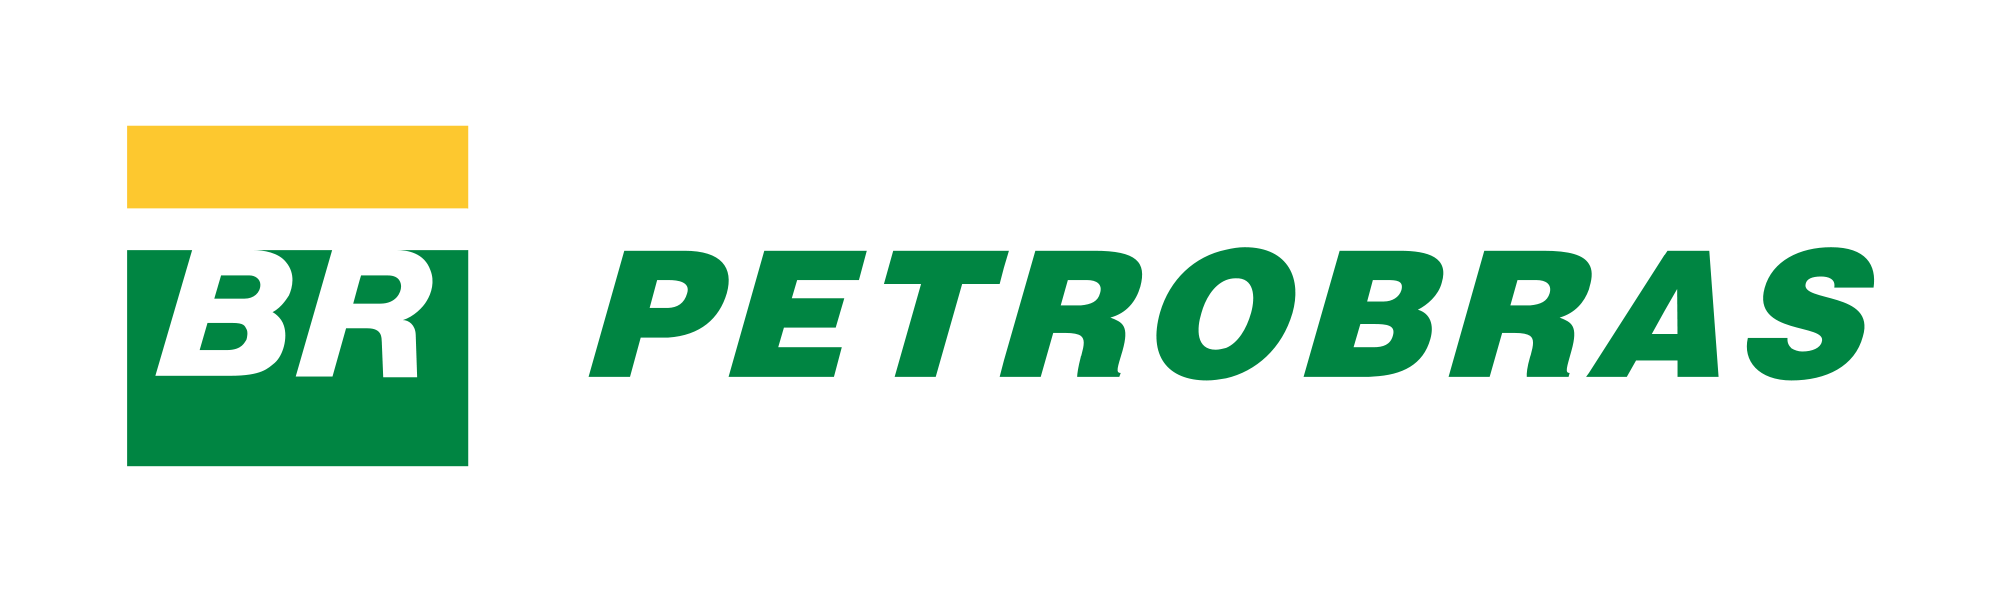 Open Hdpng.com  - Petrobras, Transparent background PNG HD thumbnail